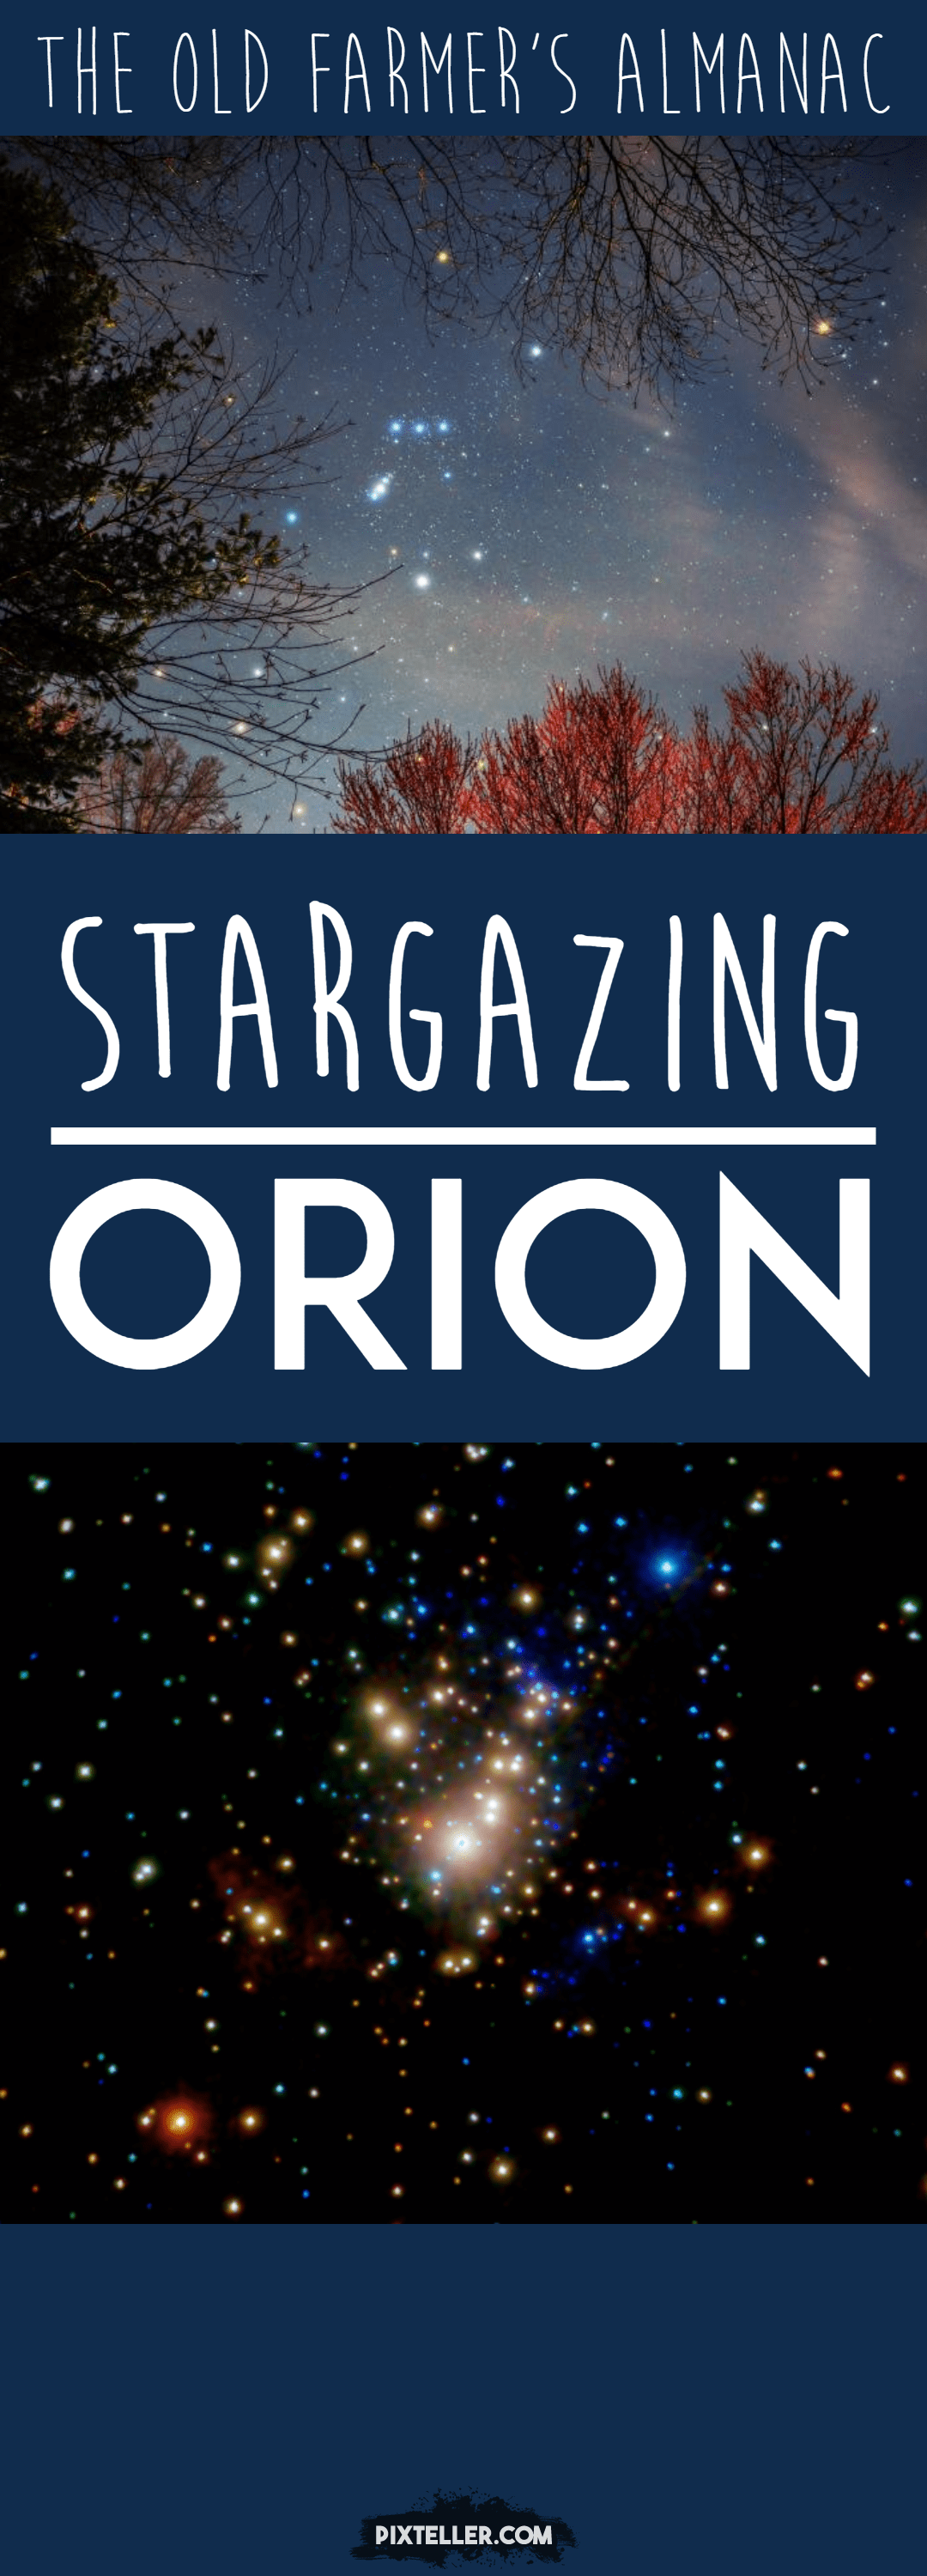 OFA 3-21-17 Orion Design 